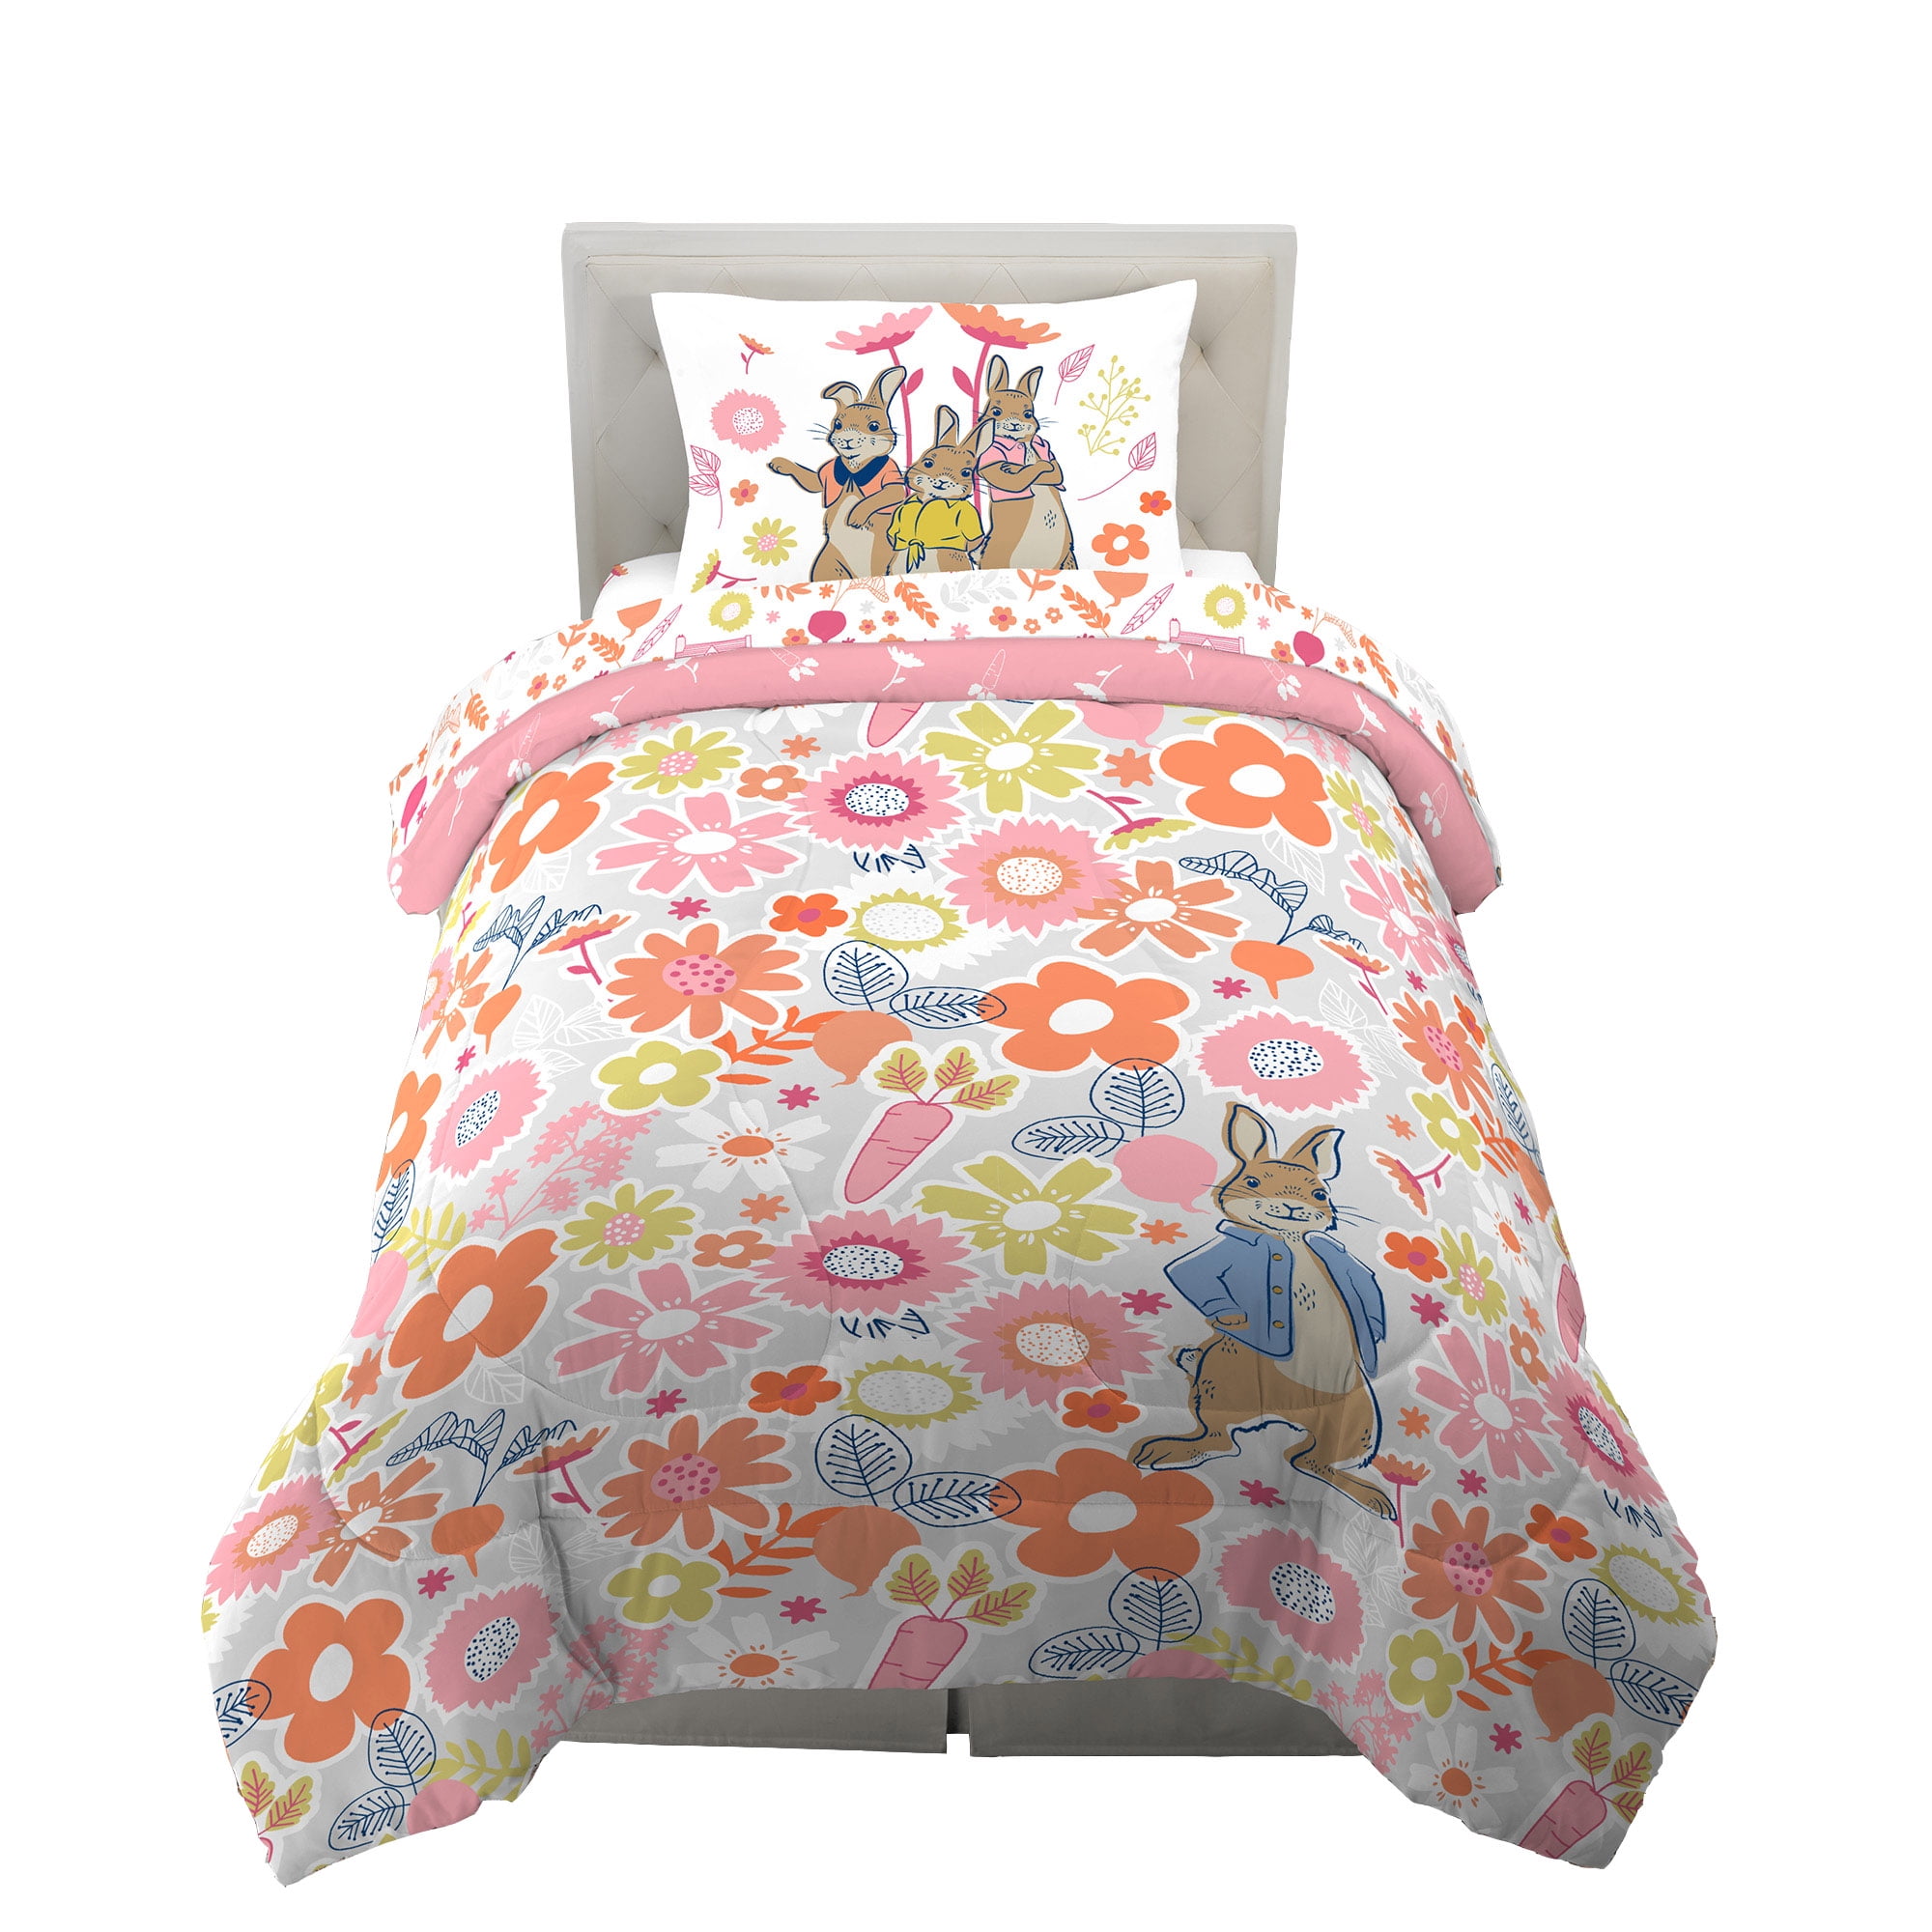 Next Peter Rabbit Kids Single Duvet Cover Pillowcase Bed Set Bedding New 